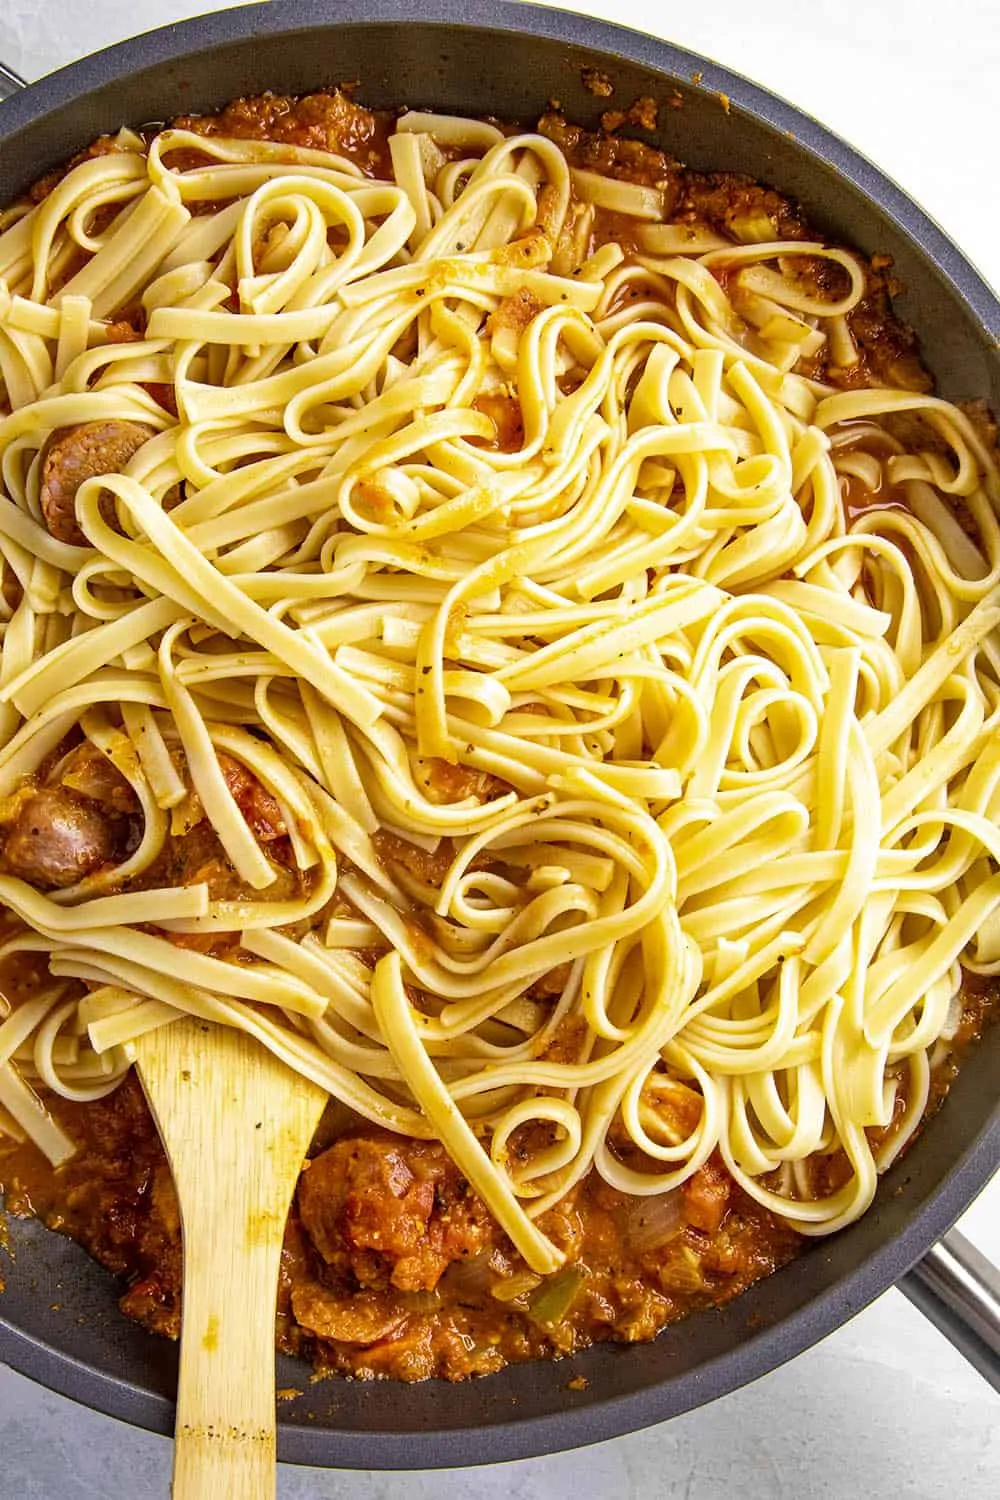 Swirling pasta noodles into our Cajun pasta sauce